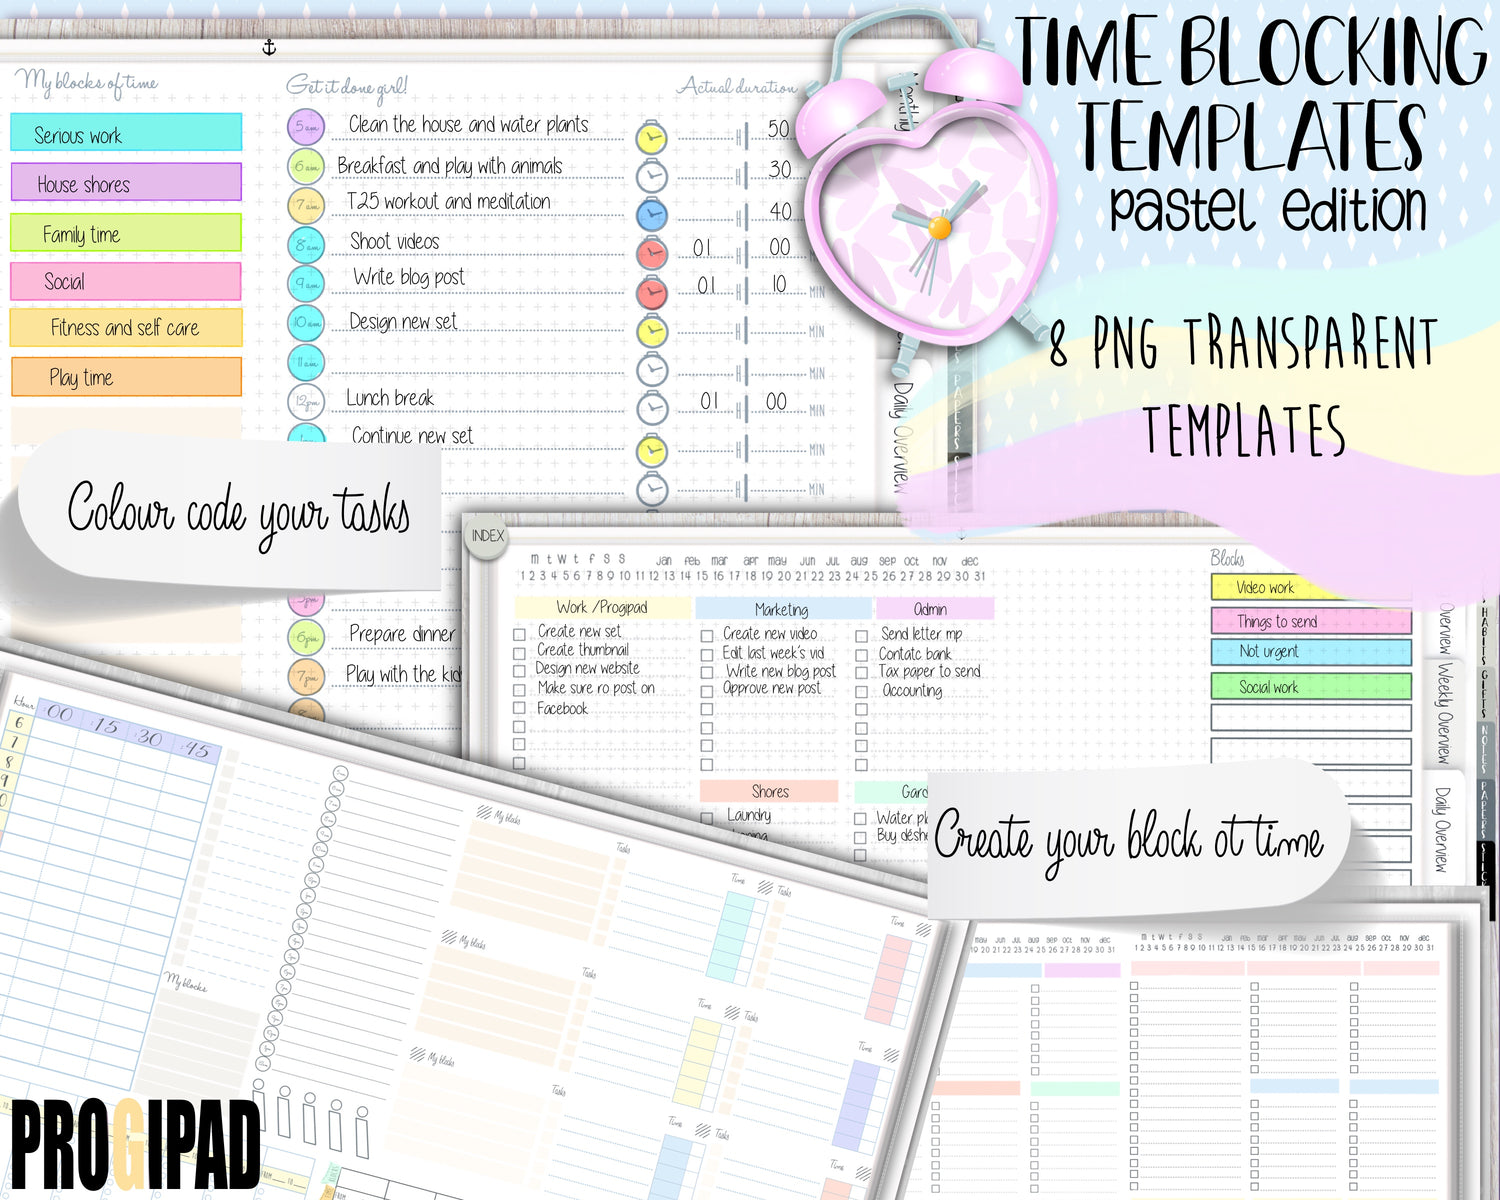 Time Blocking templates (pastel edition)